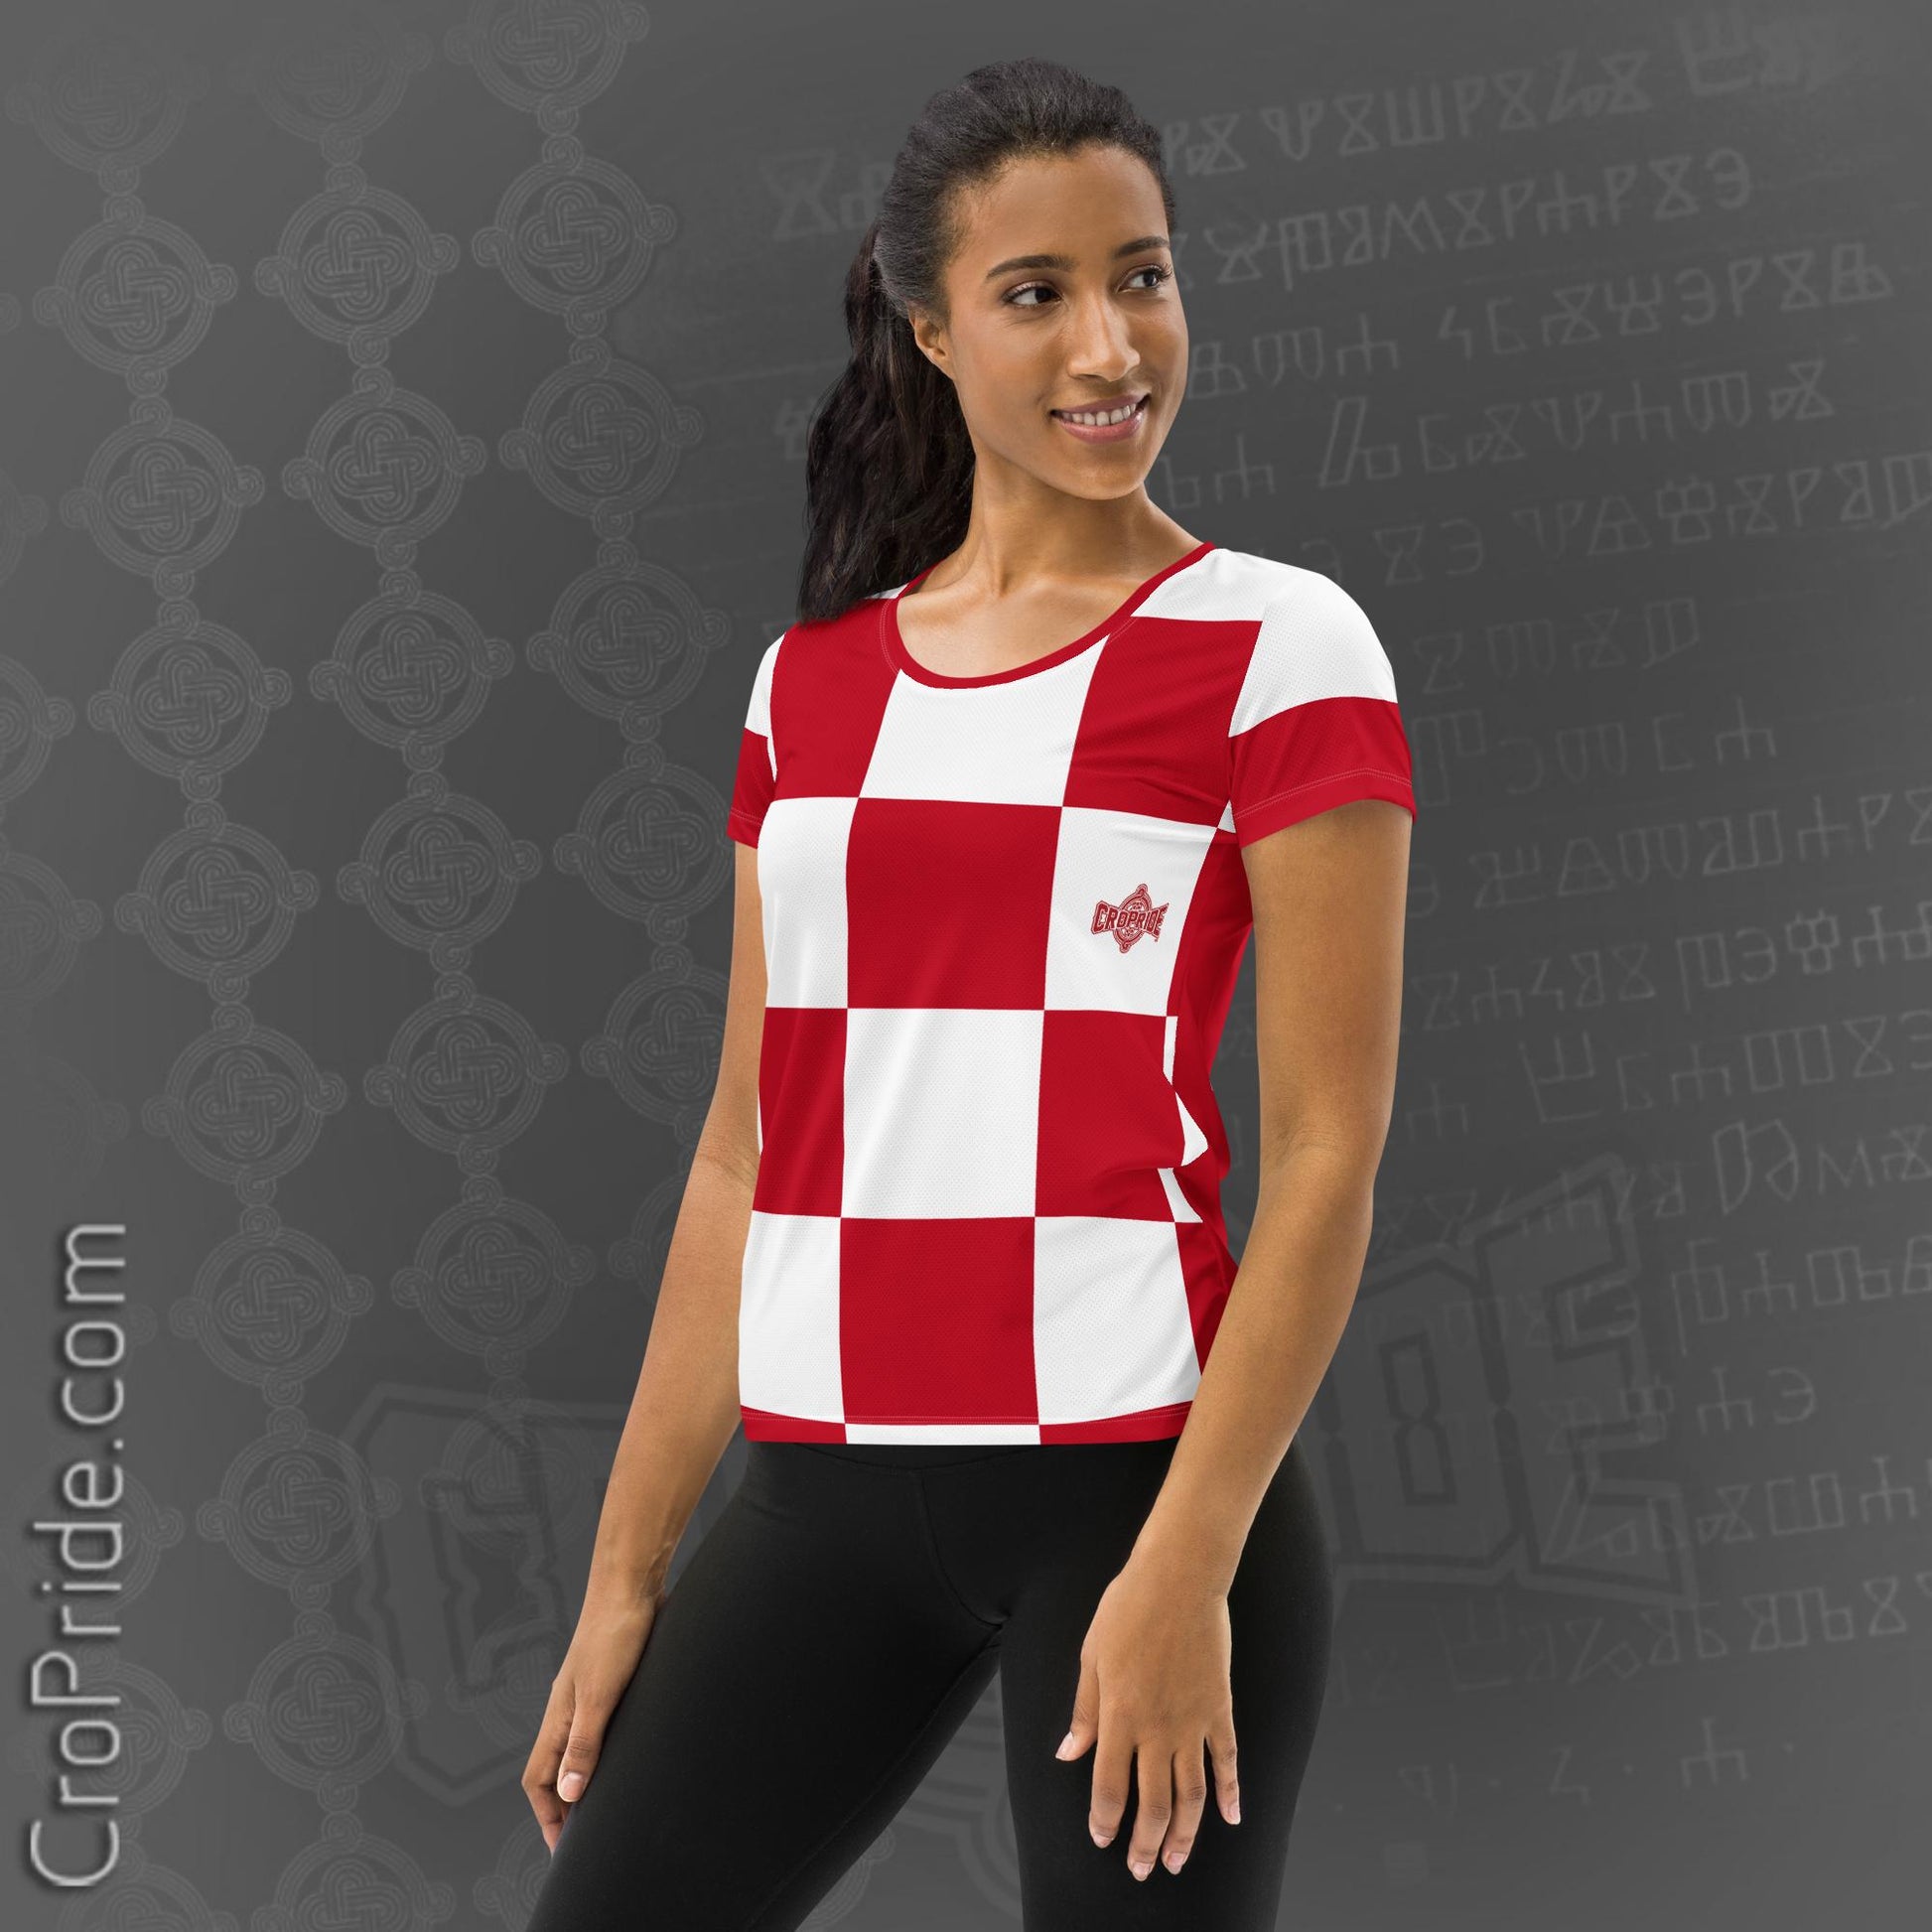 Croatian Checkers Women's Athletic T-Shirt (Sizes XS-3XL)